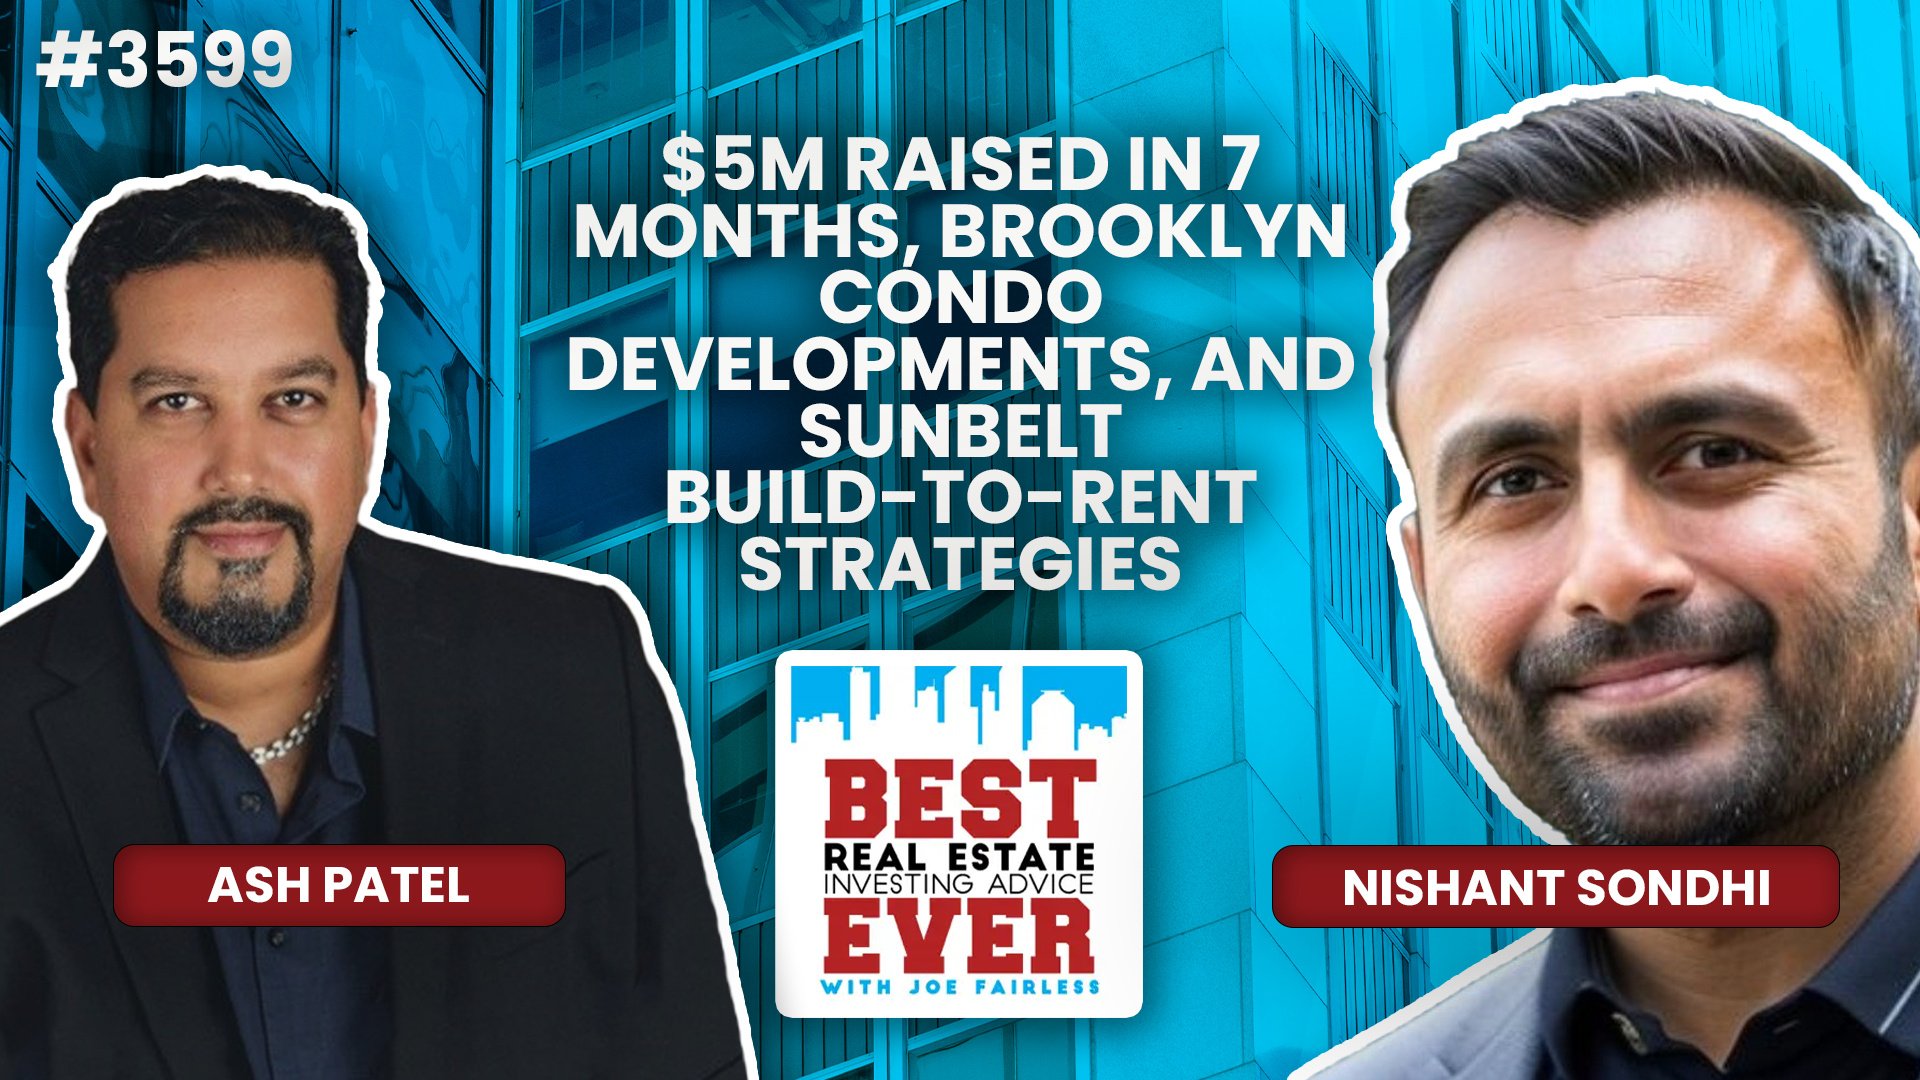 JF3599: $5M Raised in 7 Months, Brooklyn Condo Developments, and Sunbelt Build-to-Rent Strategies ft. Nishant Sondhi